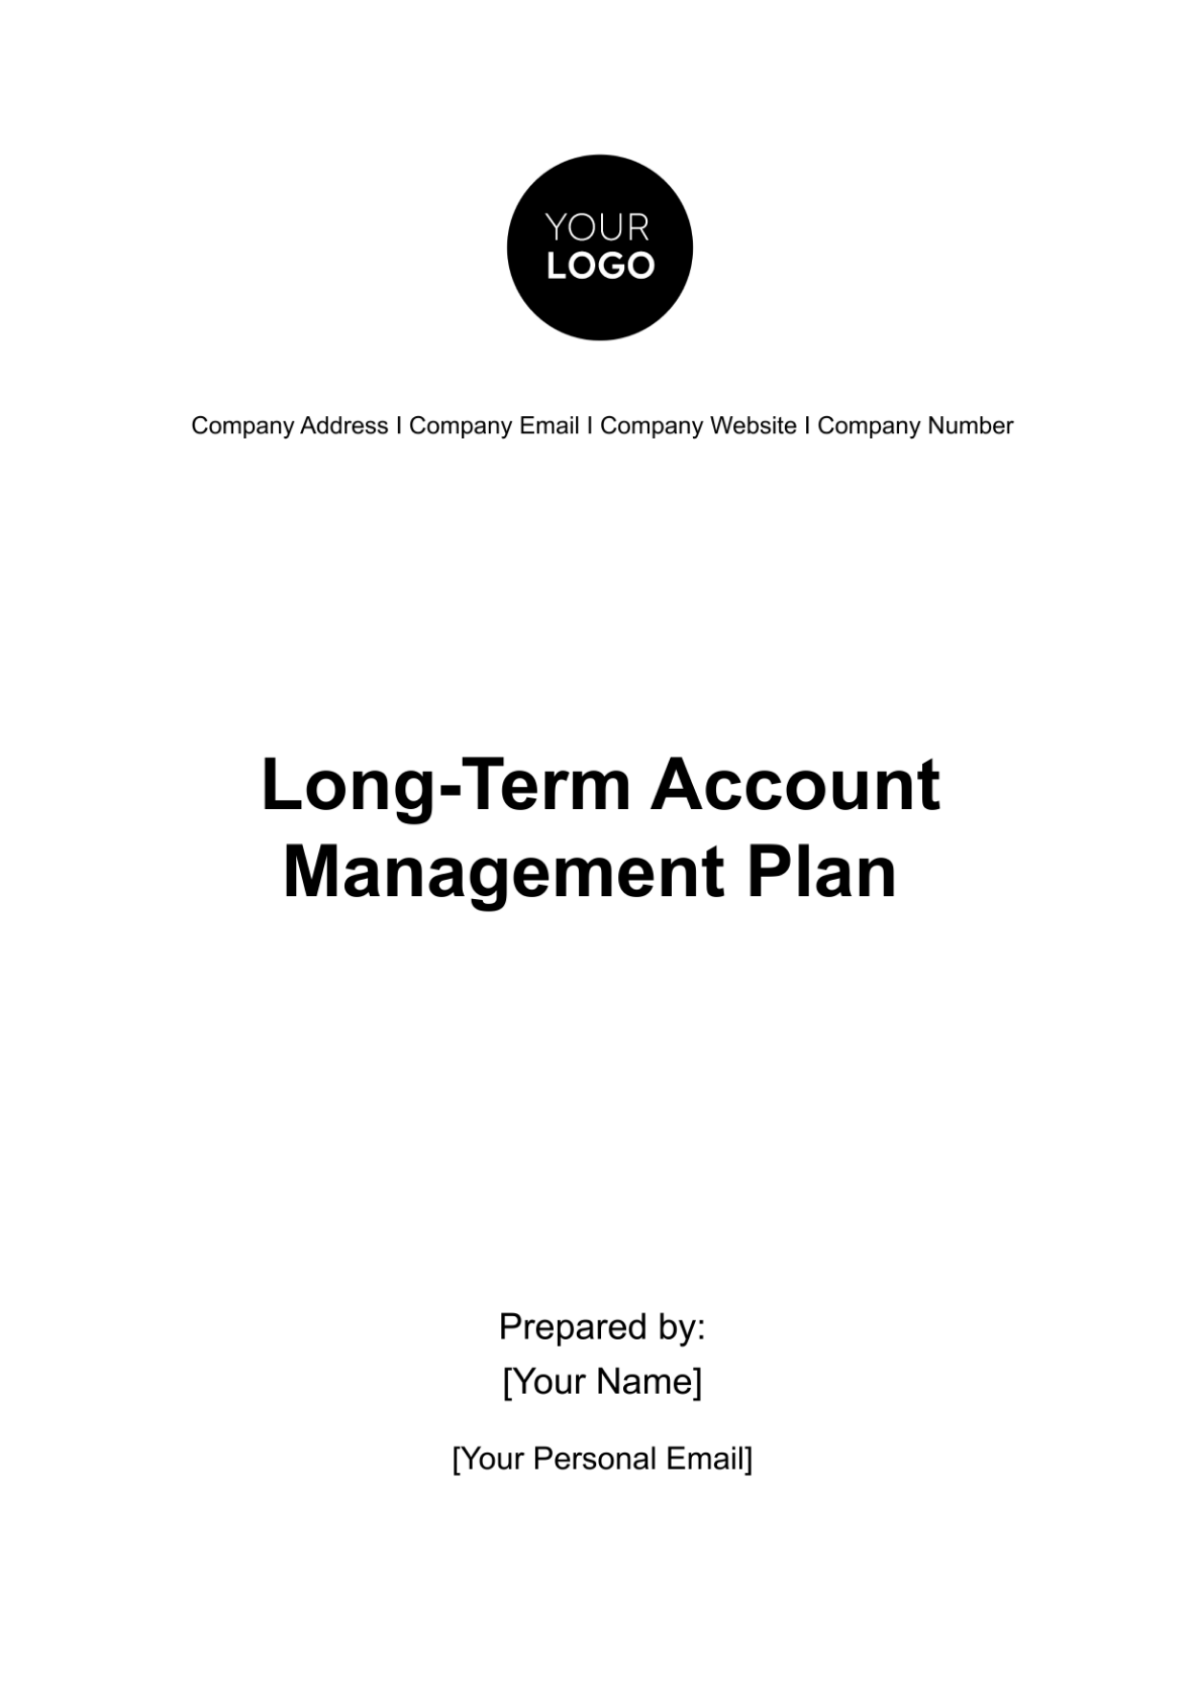 Free Long-Term Account Management Plan Template